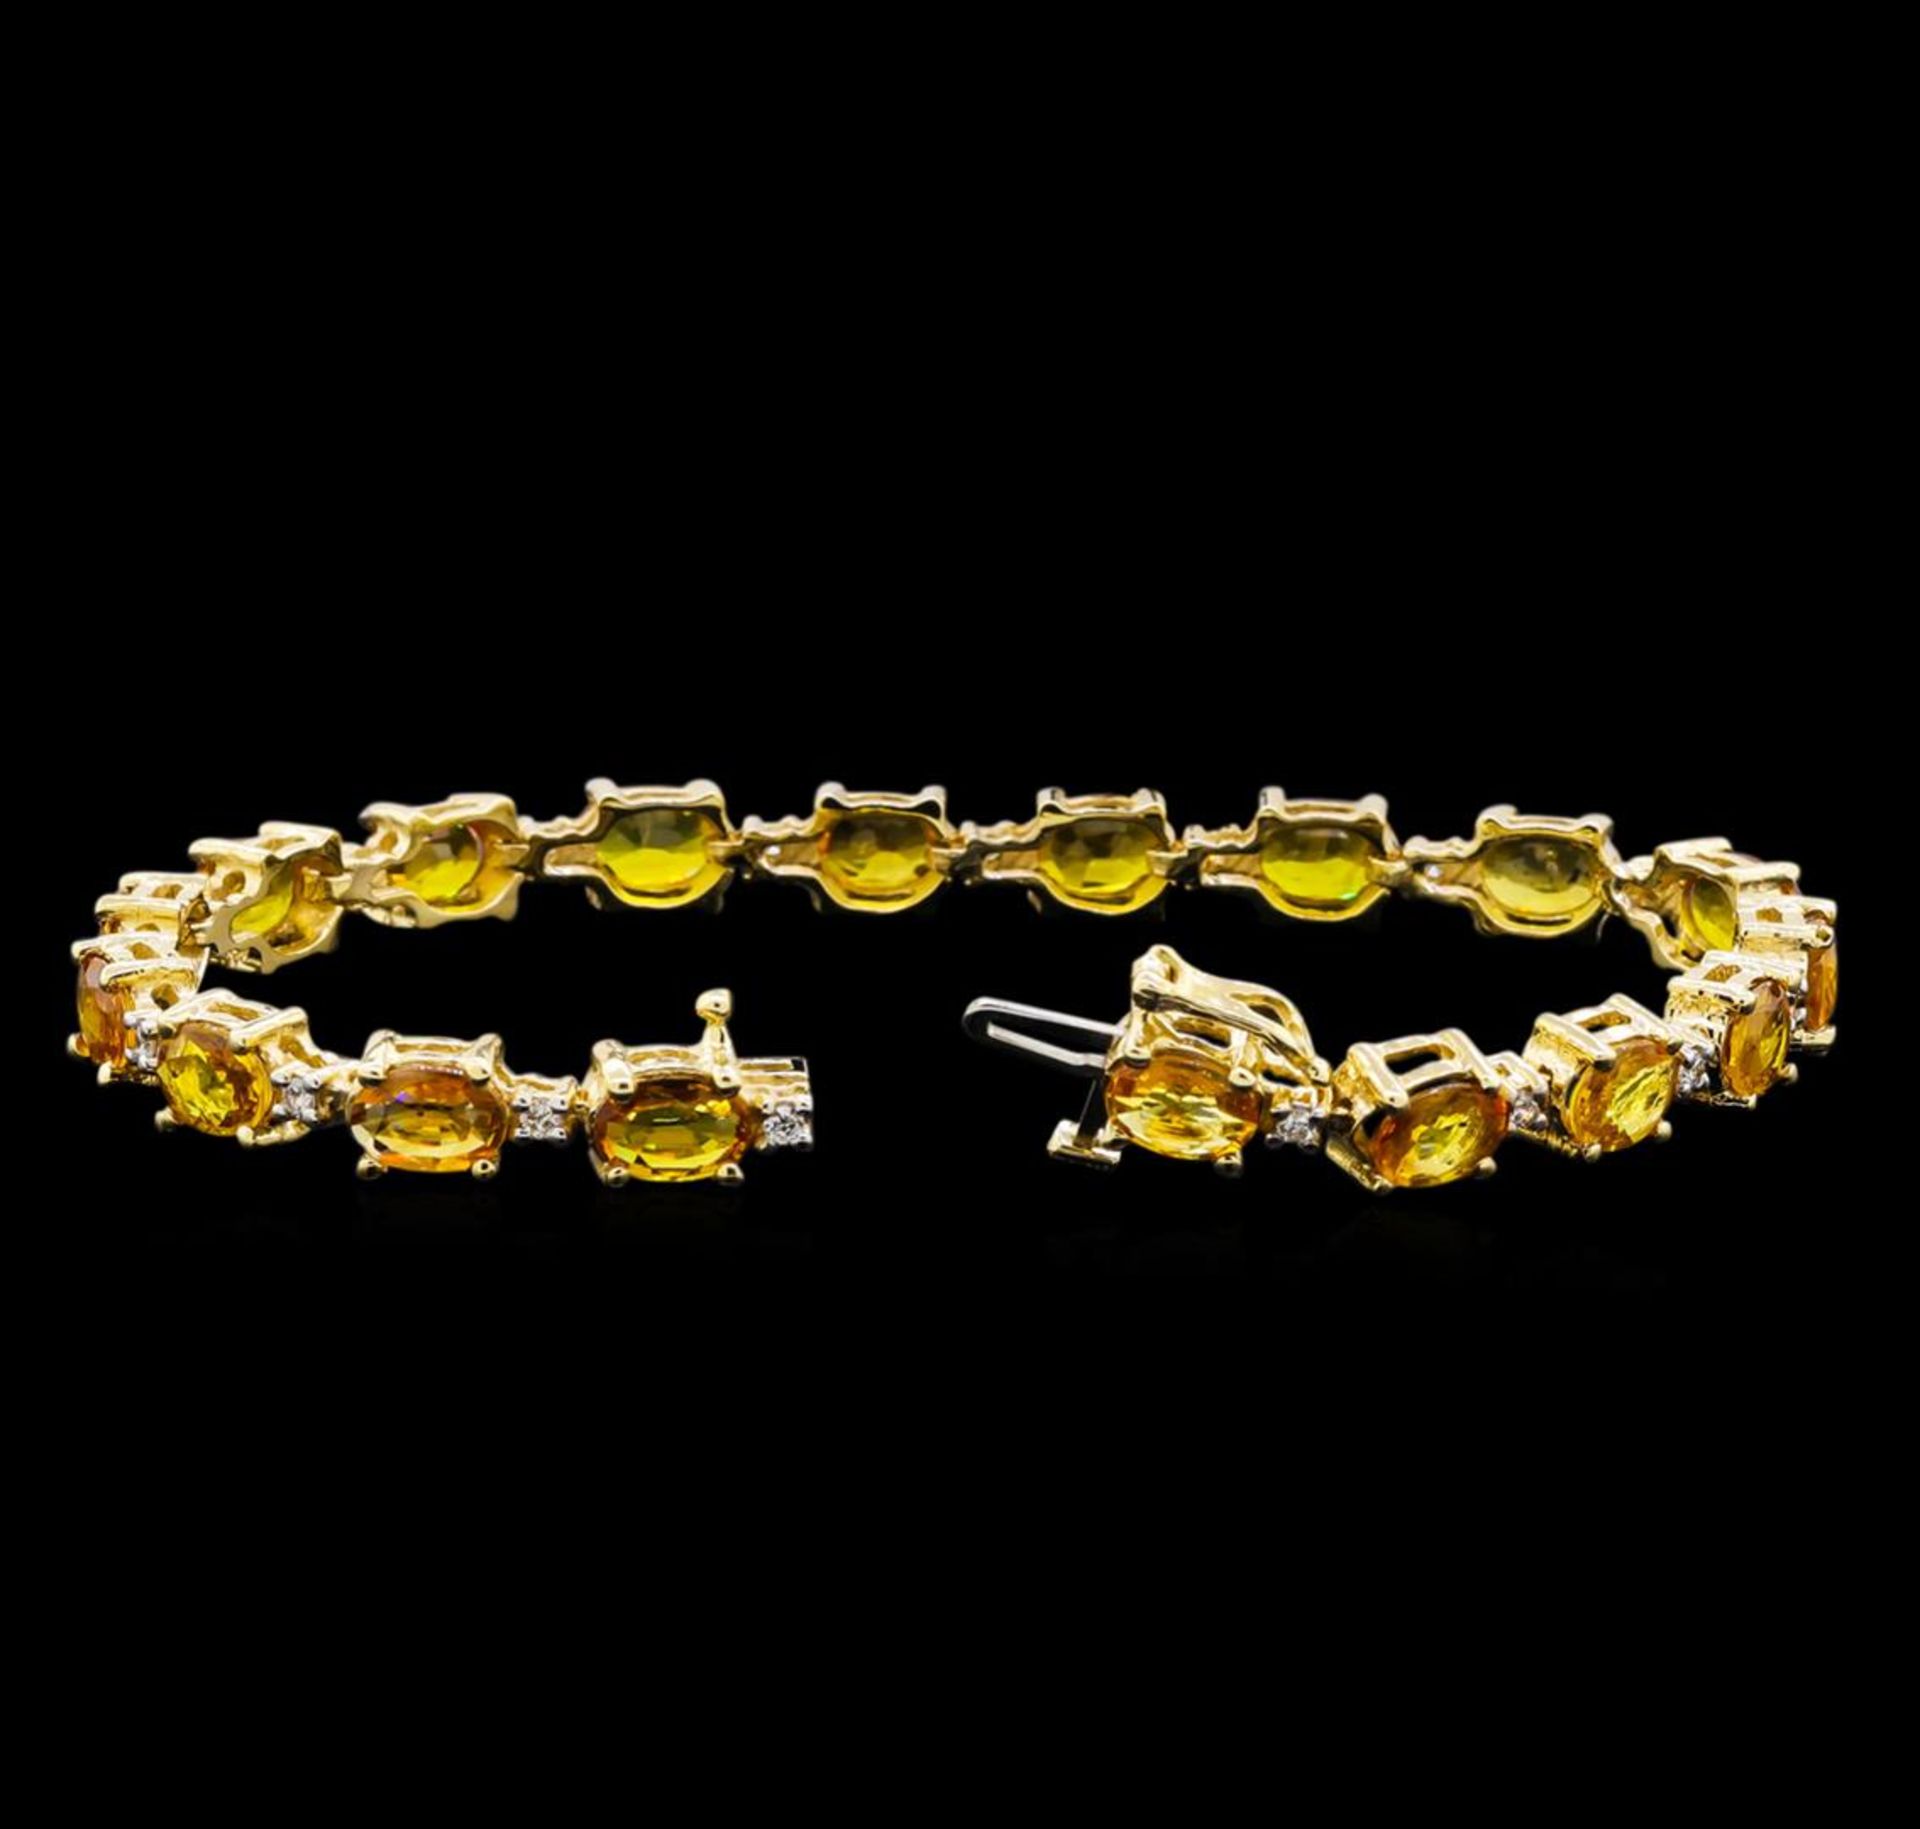 15.57 ctw Yellow Sapphire and Diamond Bracelet - 14KT Yellow Gold - Image 3 of 4